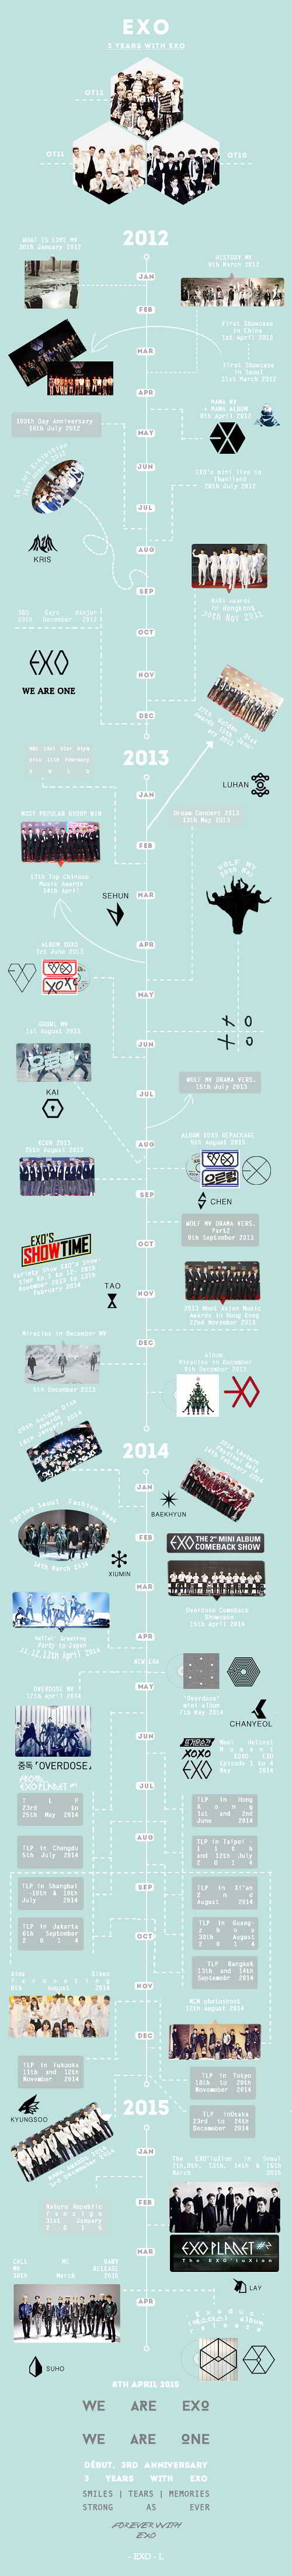 EXO 3rd Year Timeline Suexo